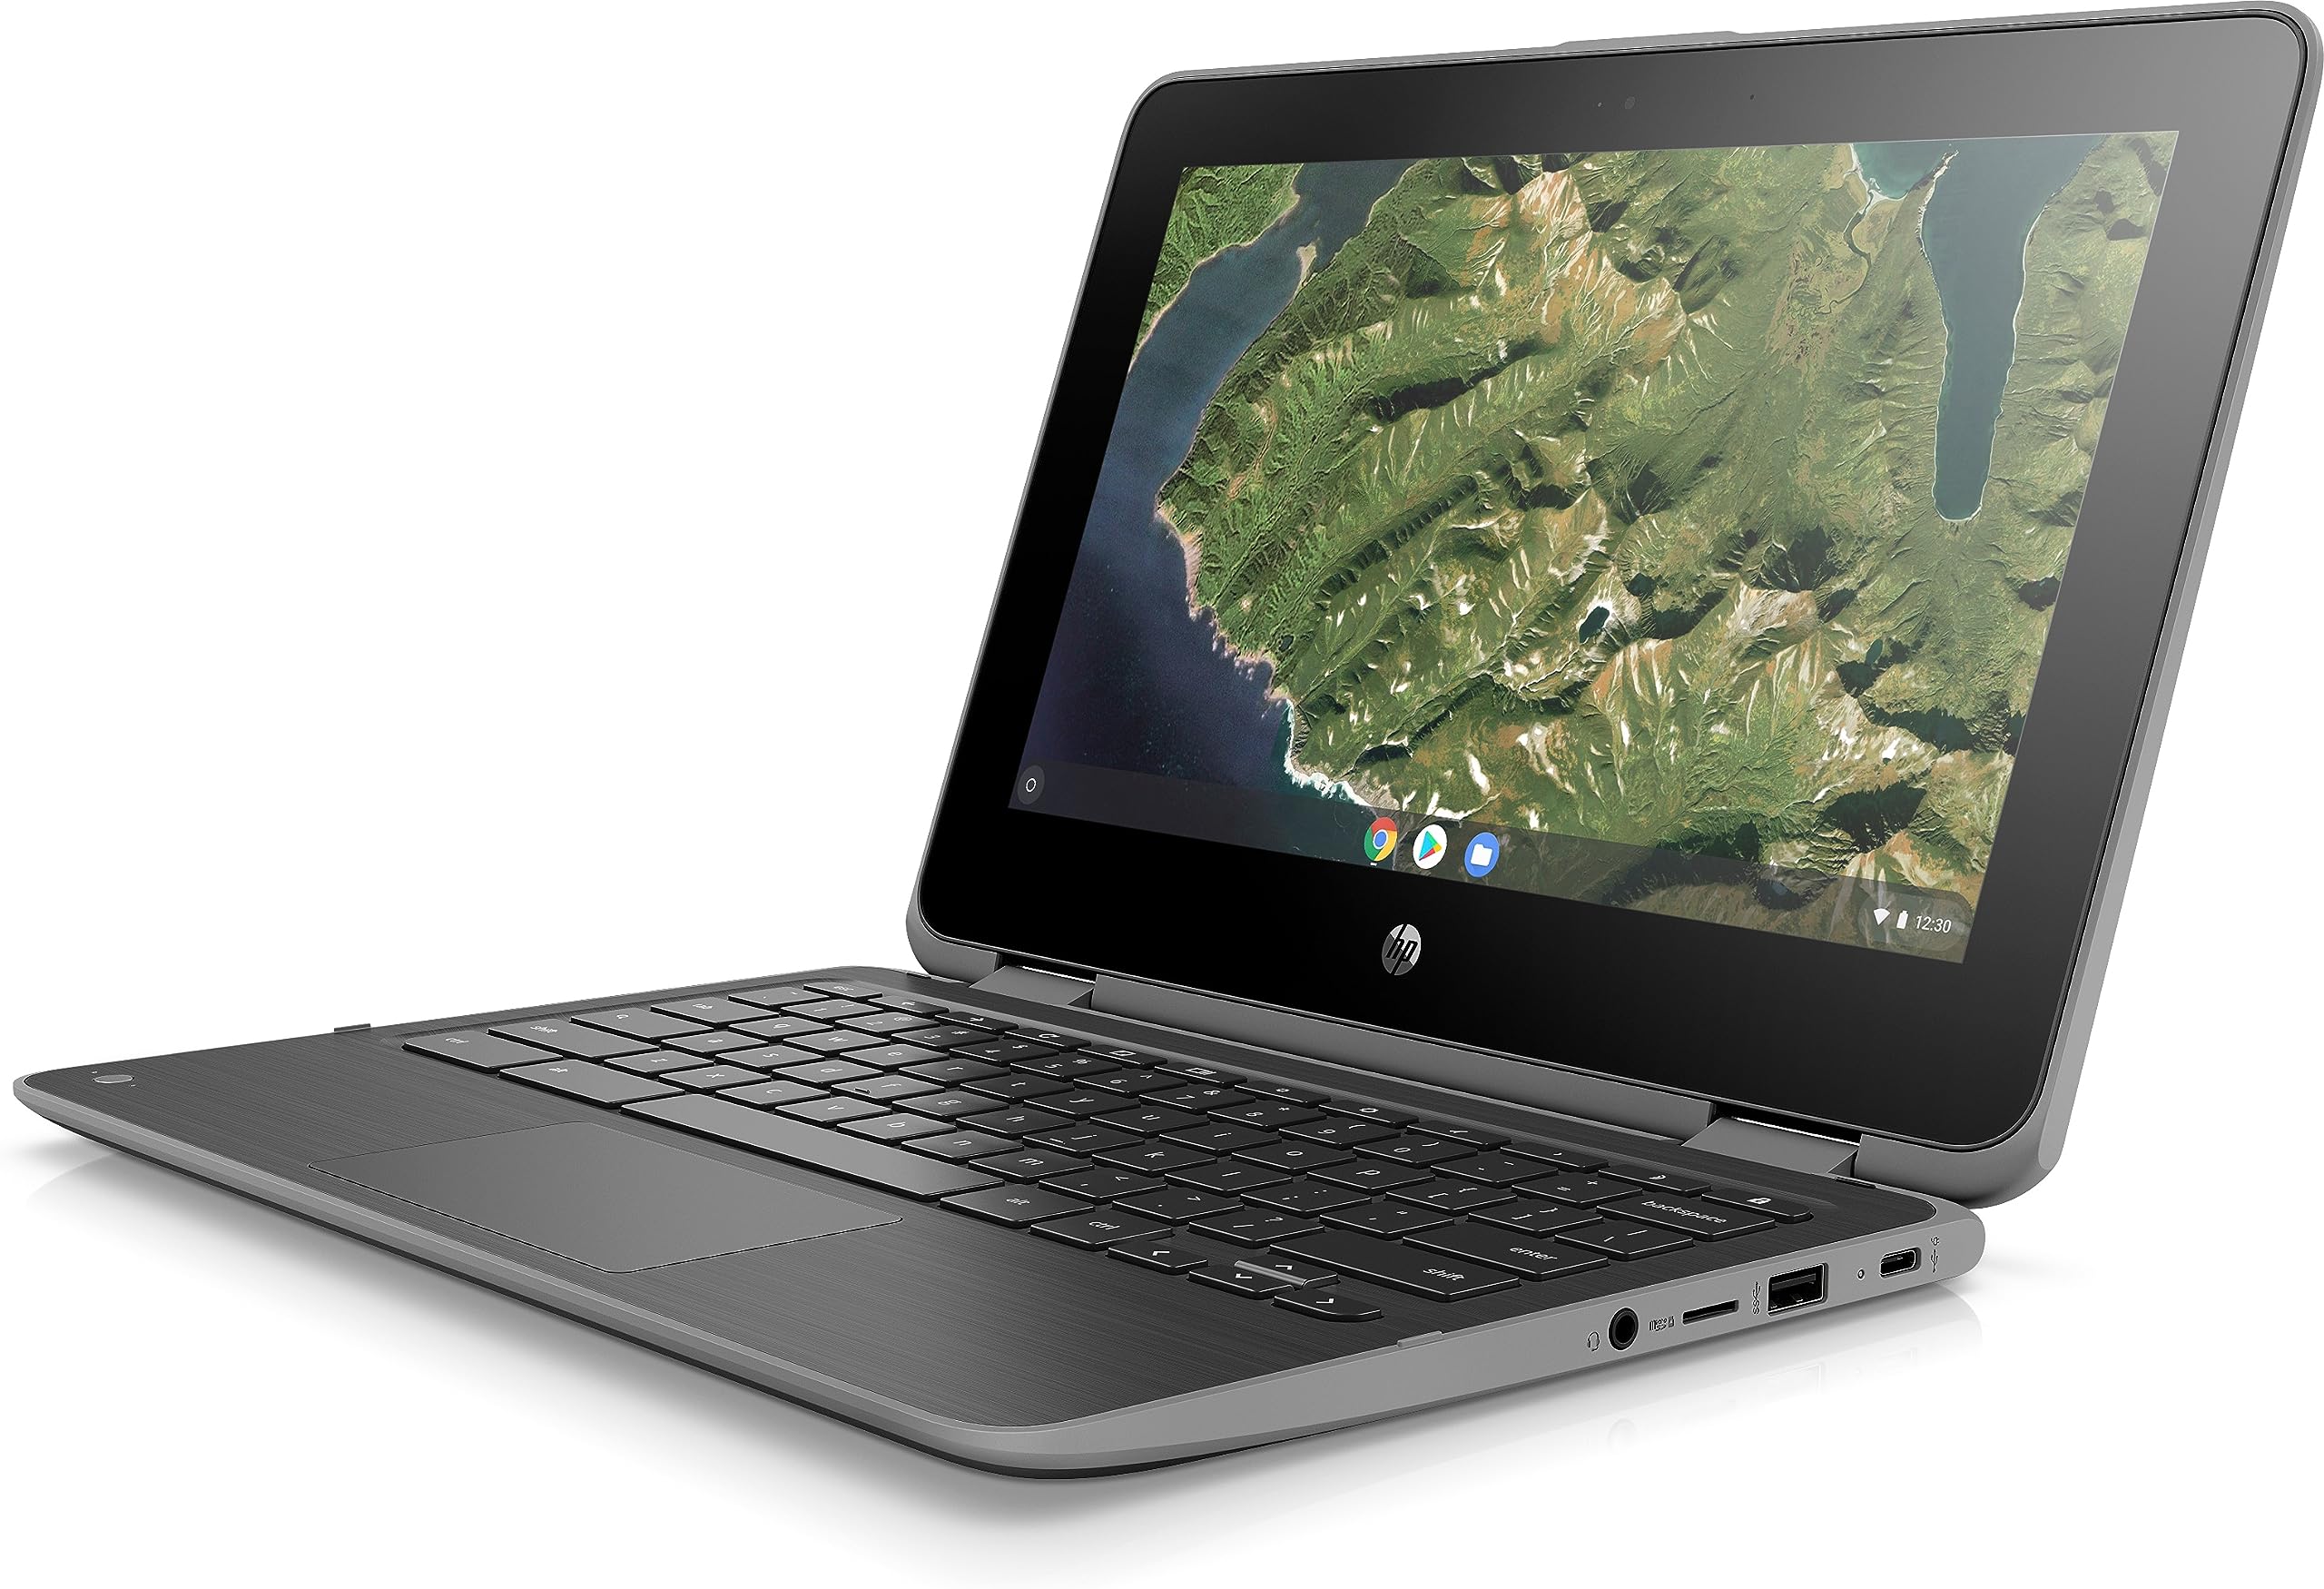 HP Chromebook 14 X360 Touchscreen - Intel Celeron - 4GB RAM - 32GB